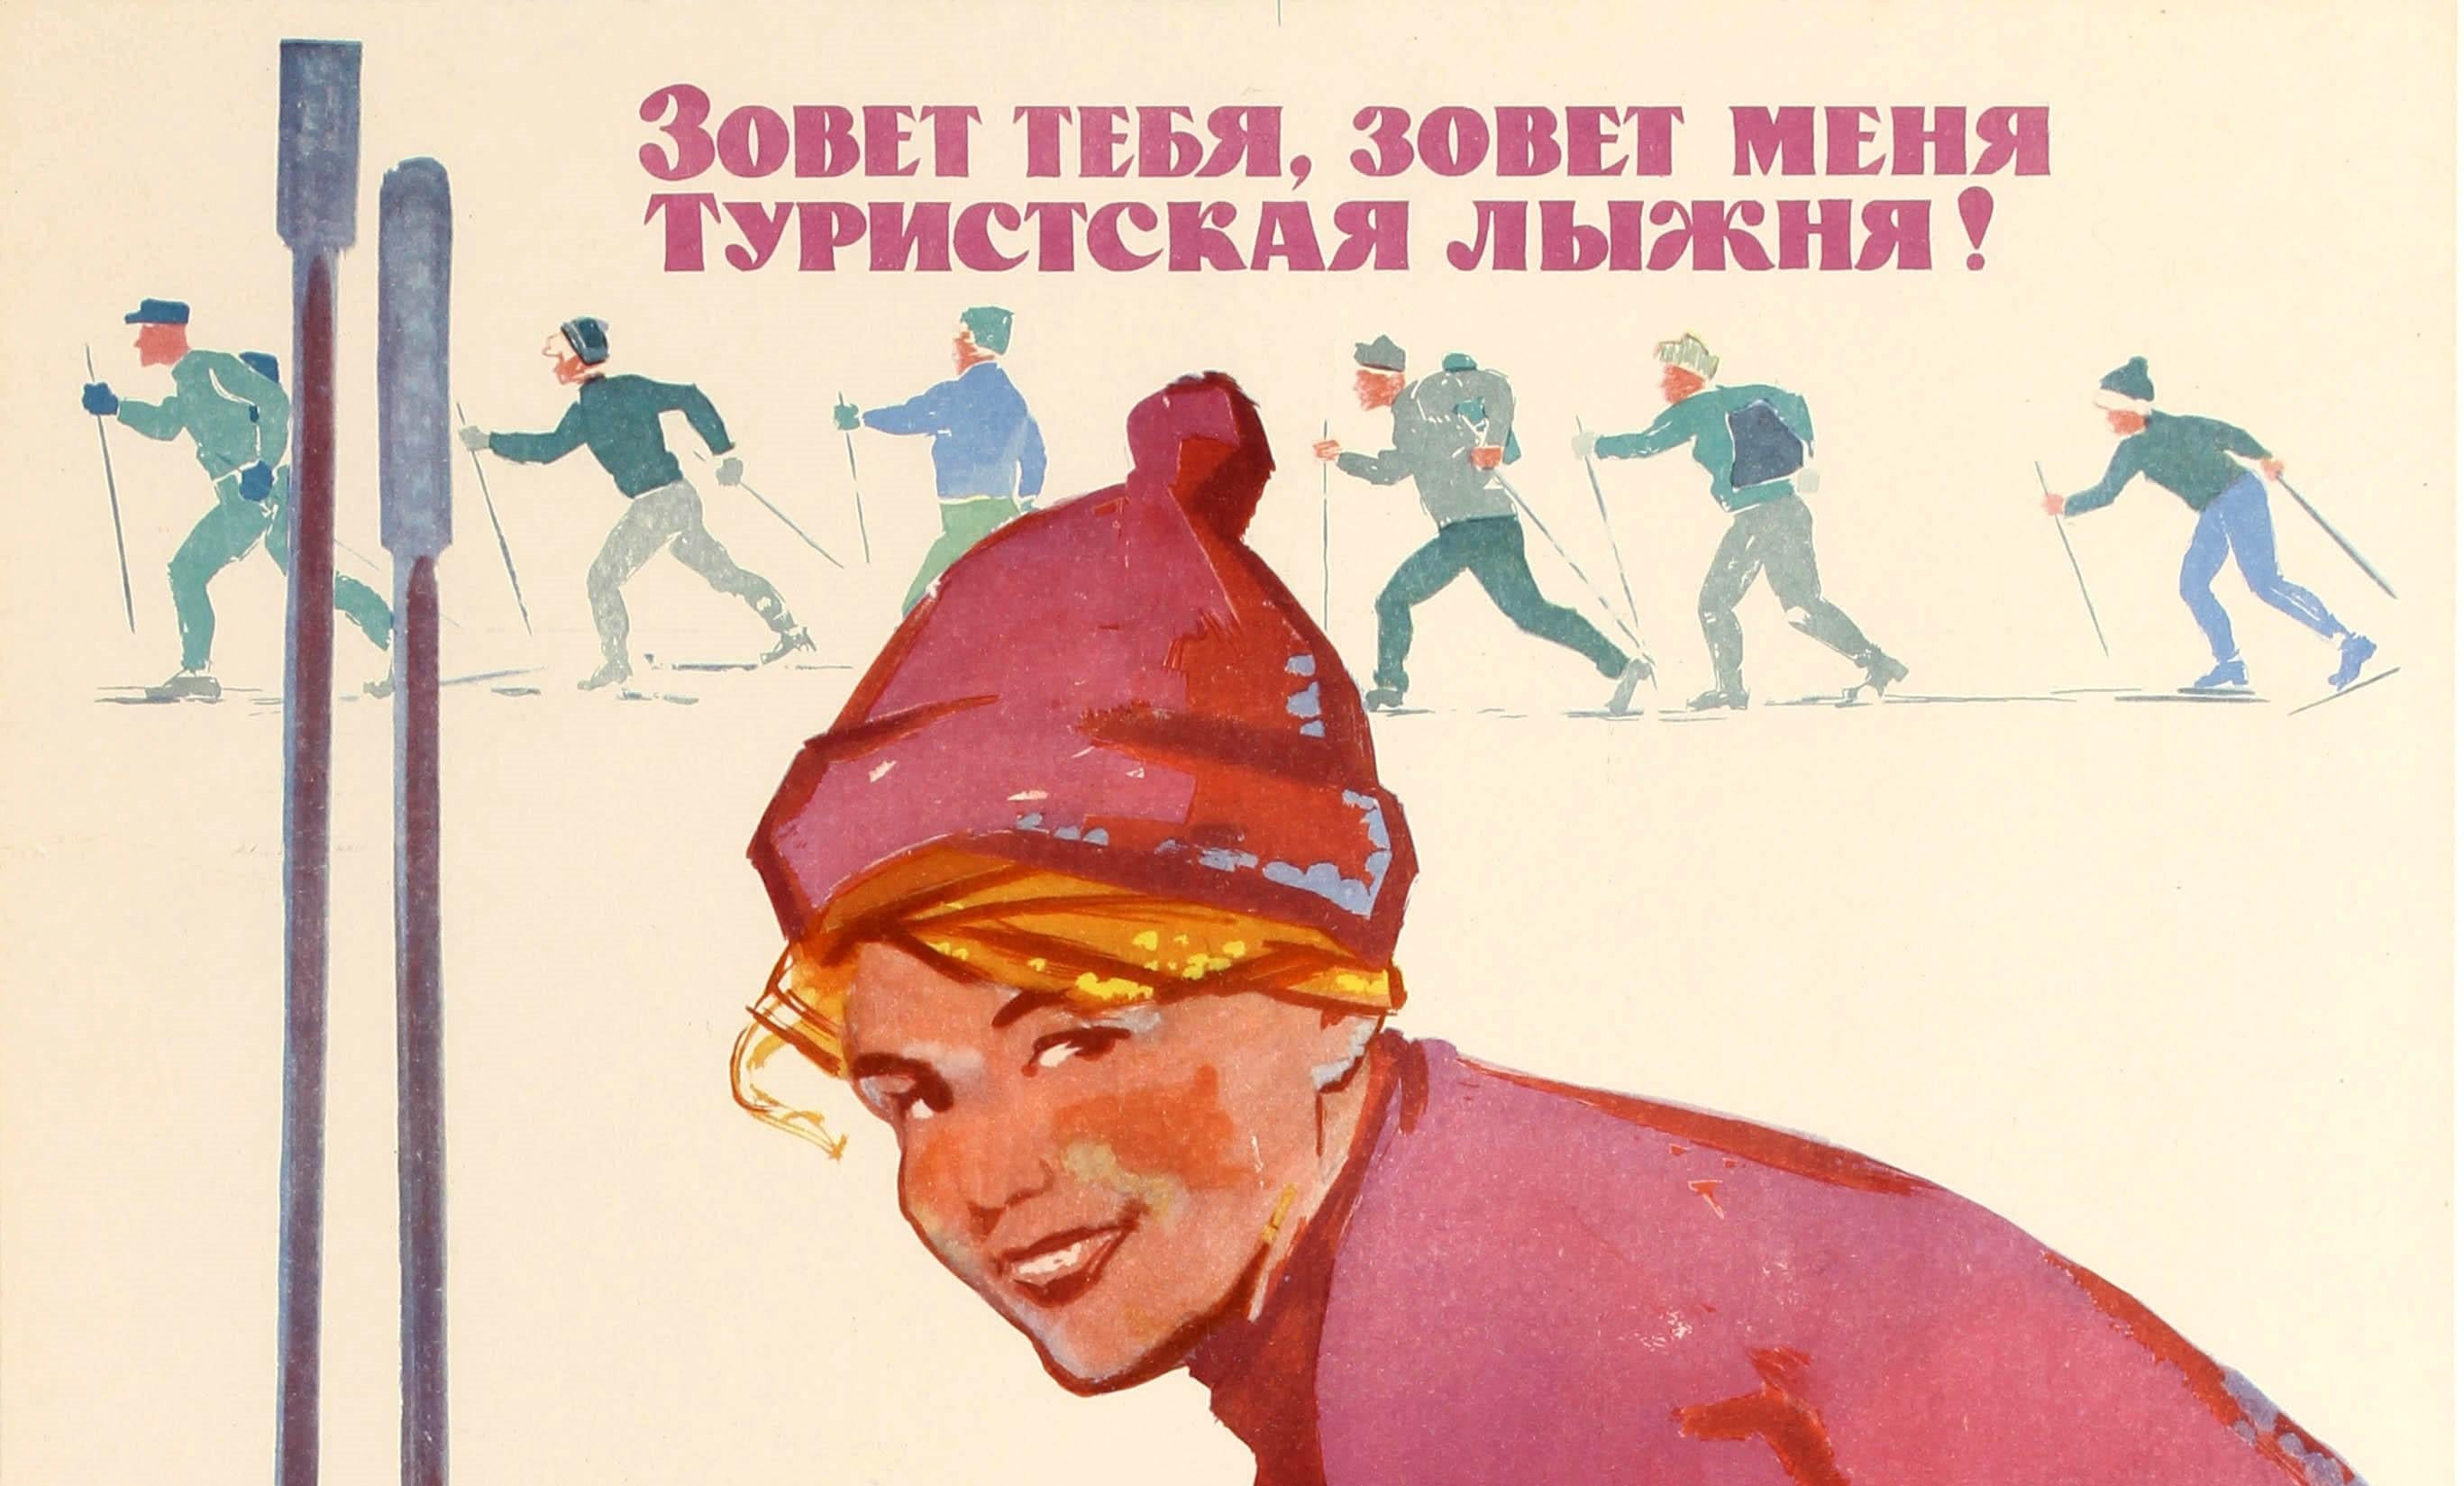 Original Vintage Soviet Winter Sport Skiing Poster - The Ski Track Is Calling! - Print by A. Dobrov